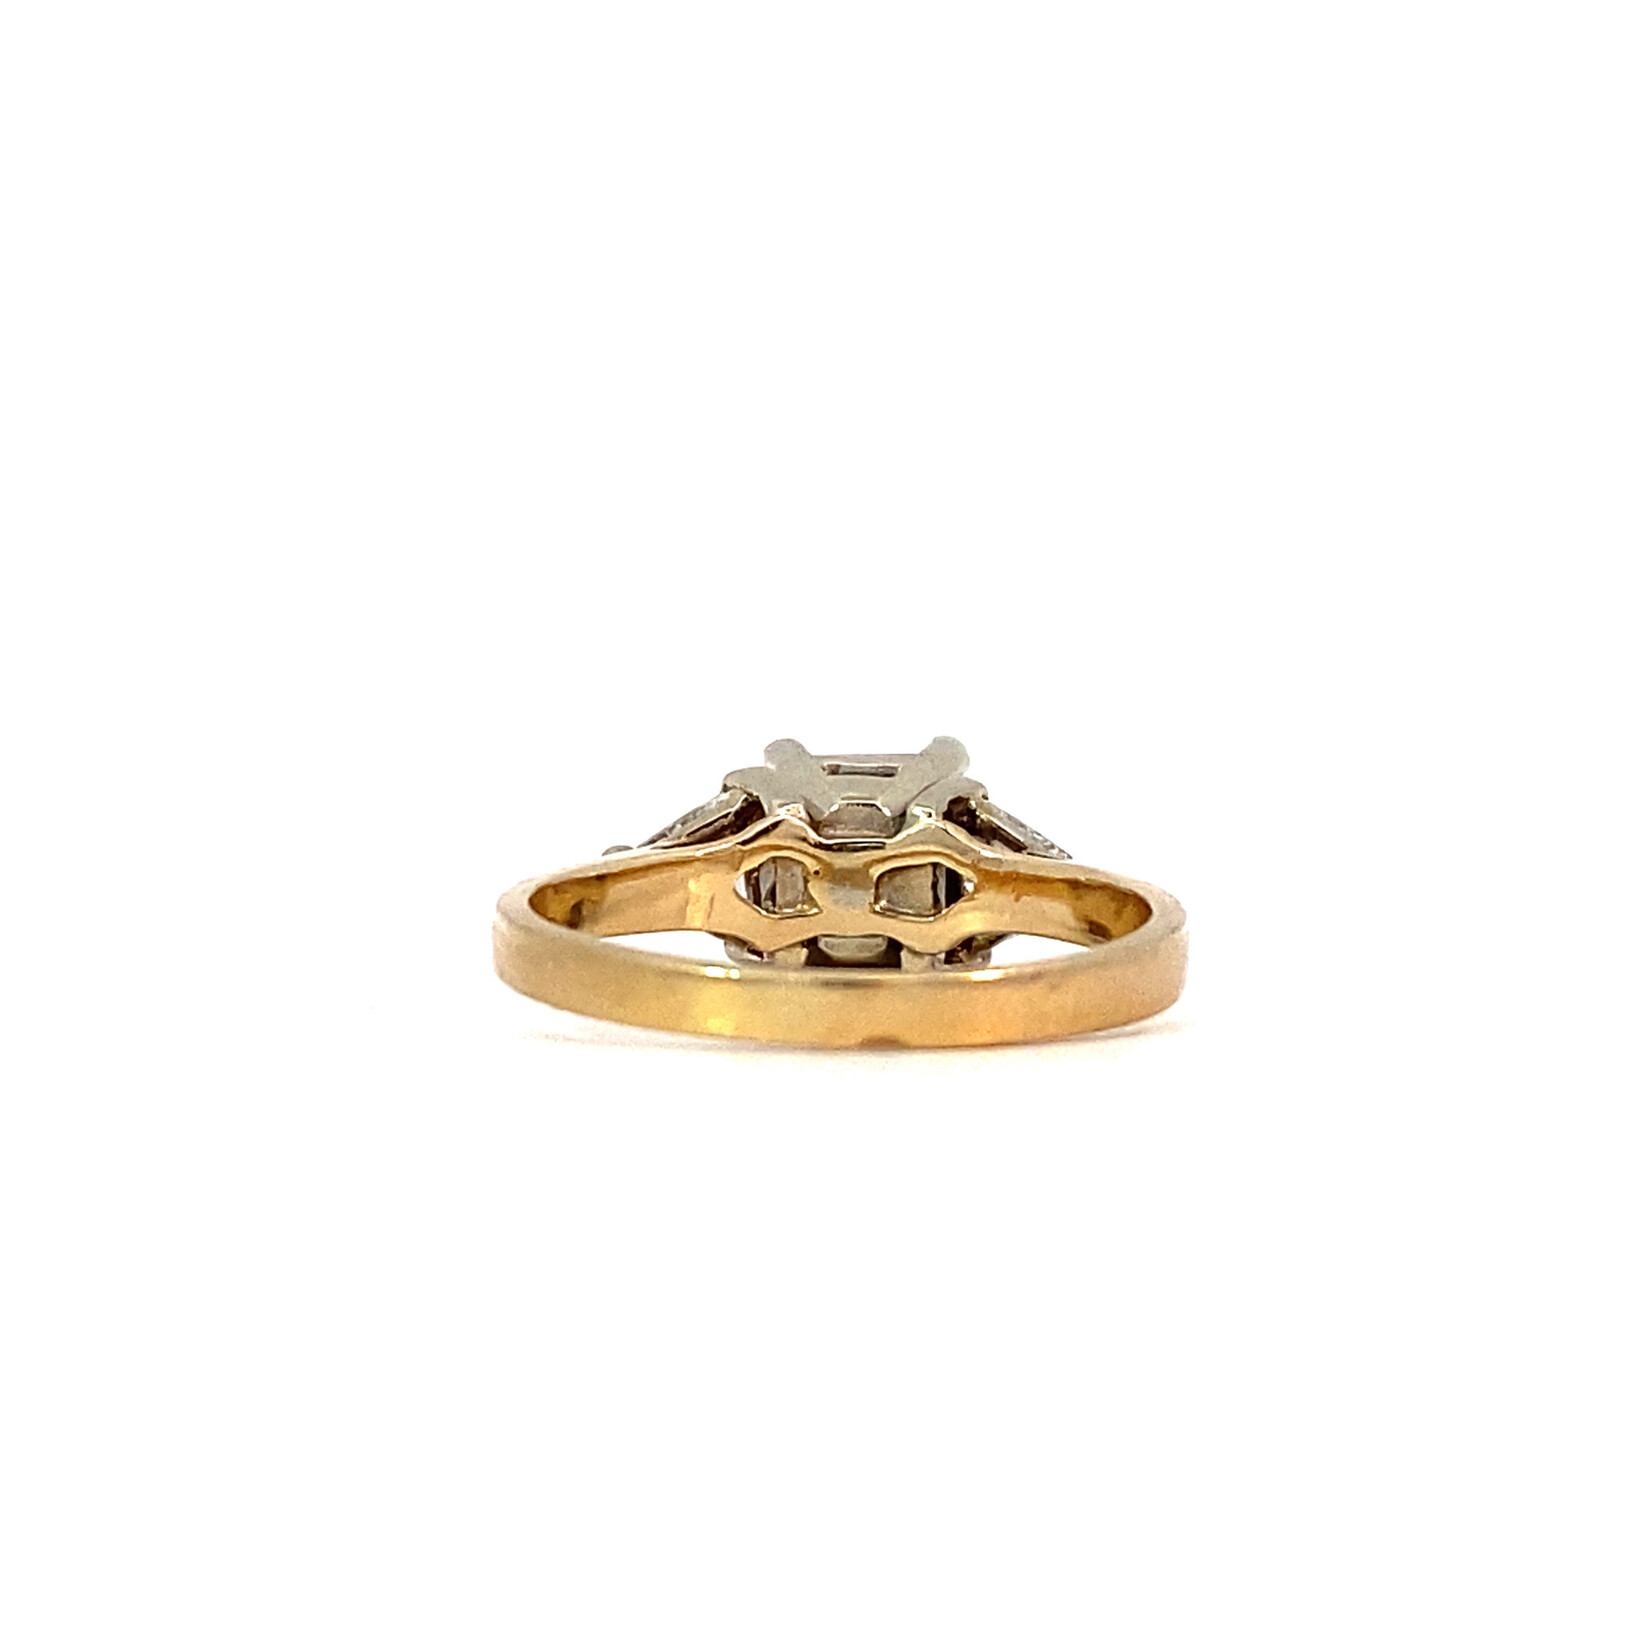 14K Yellow Gold Diamond ring  sz6  D+/-1.95cttw Ctr D+/-1.5tw I1/I2